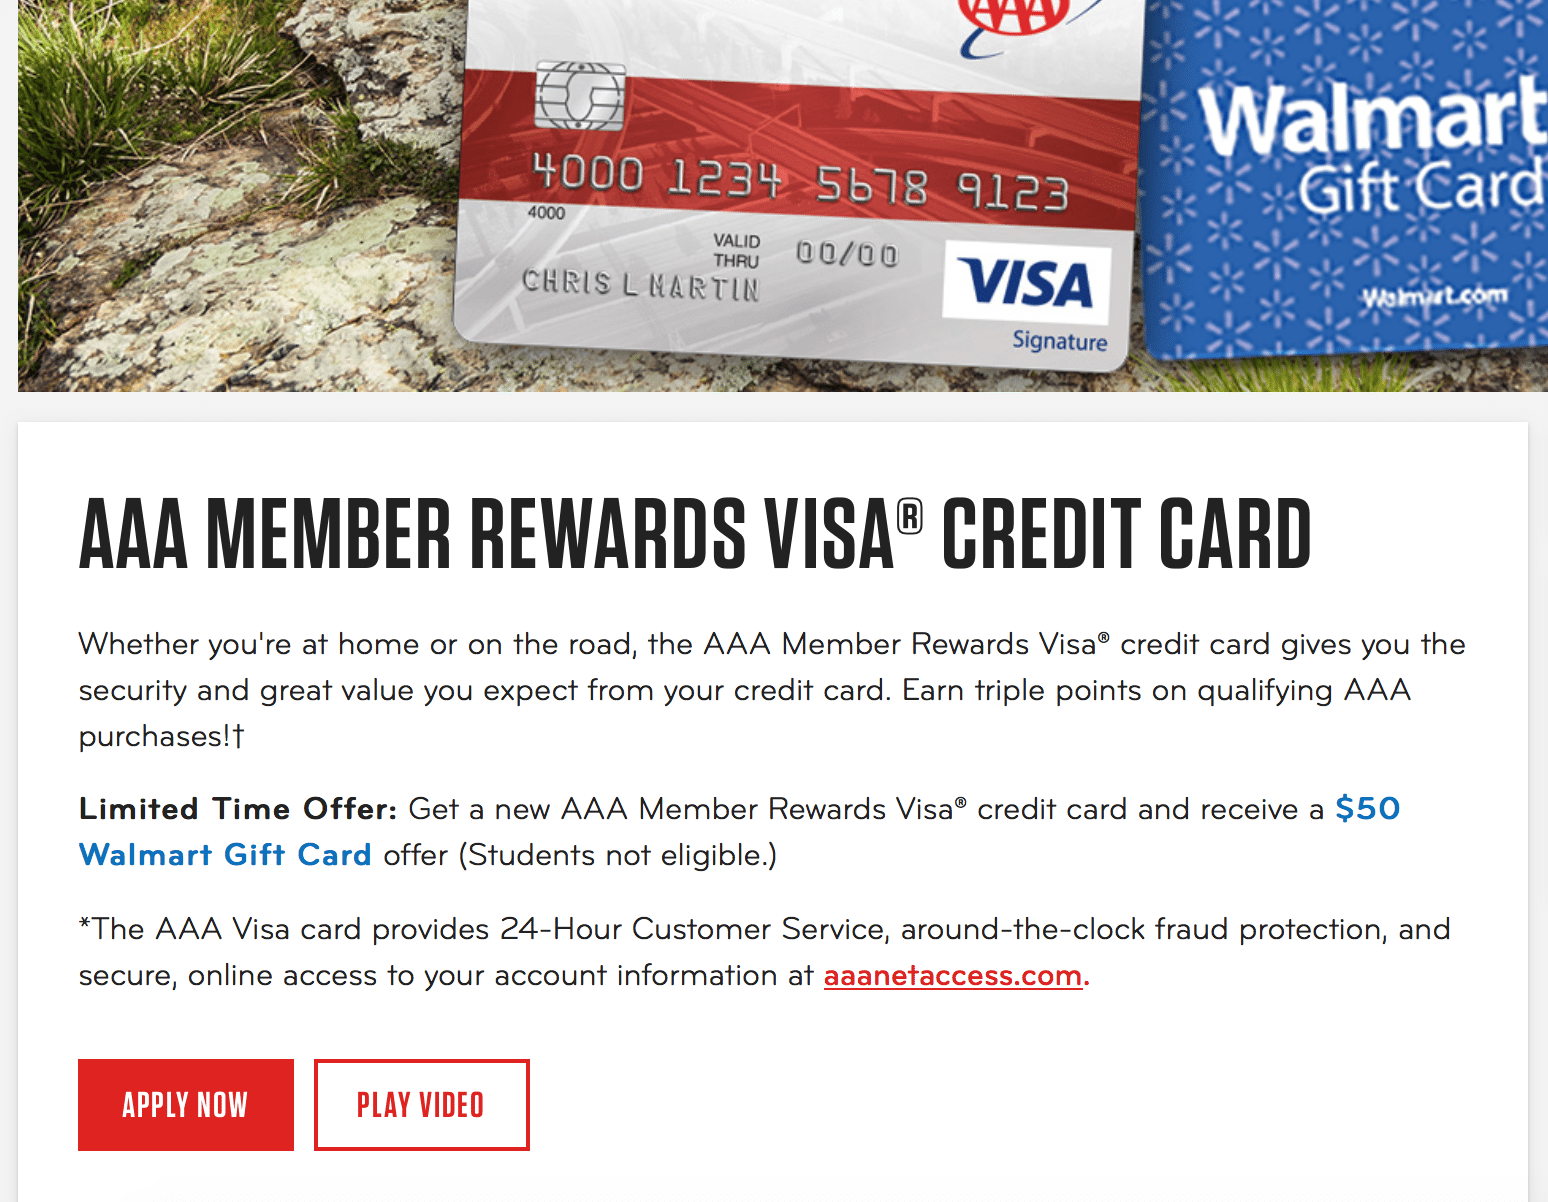 aaa credit card travel notice